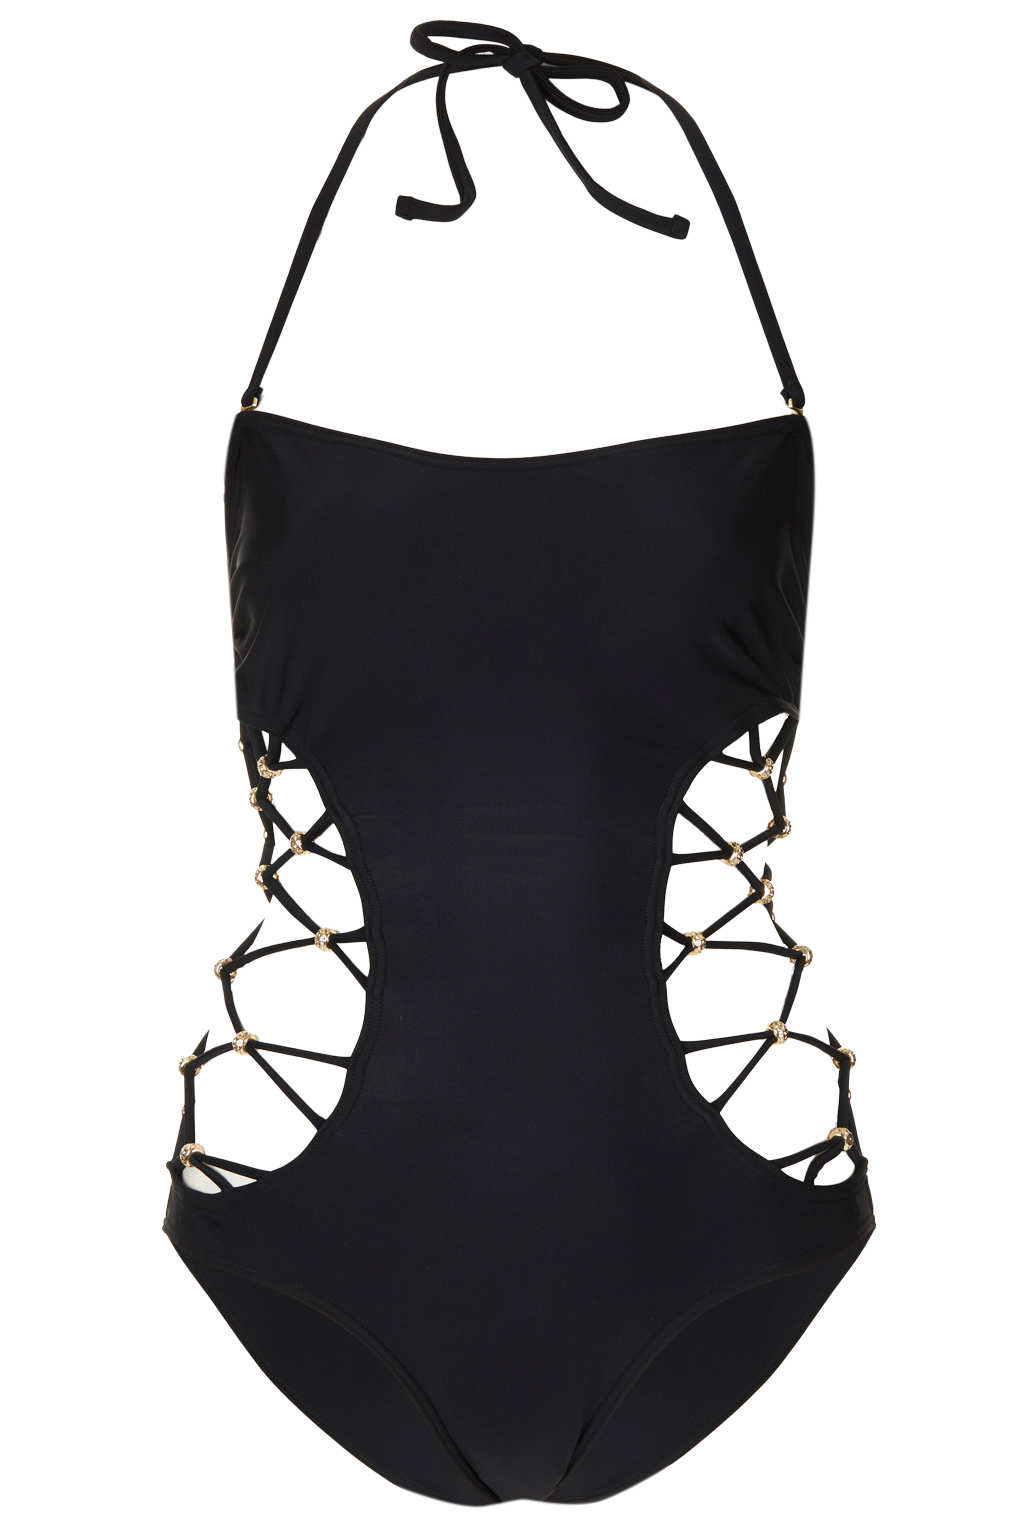 Topshop Black Beaded Lattice Swimsuit in Black | Lyst